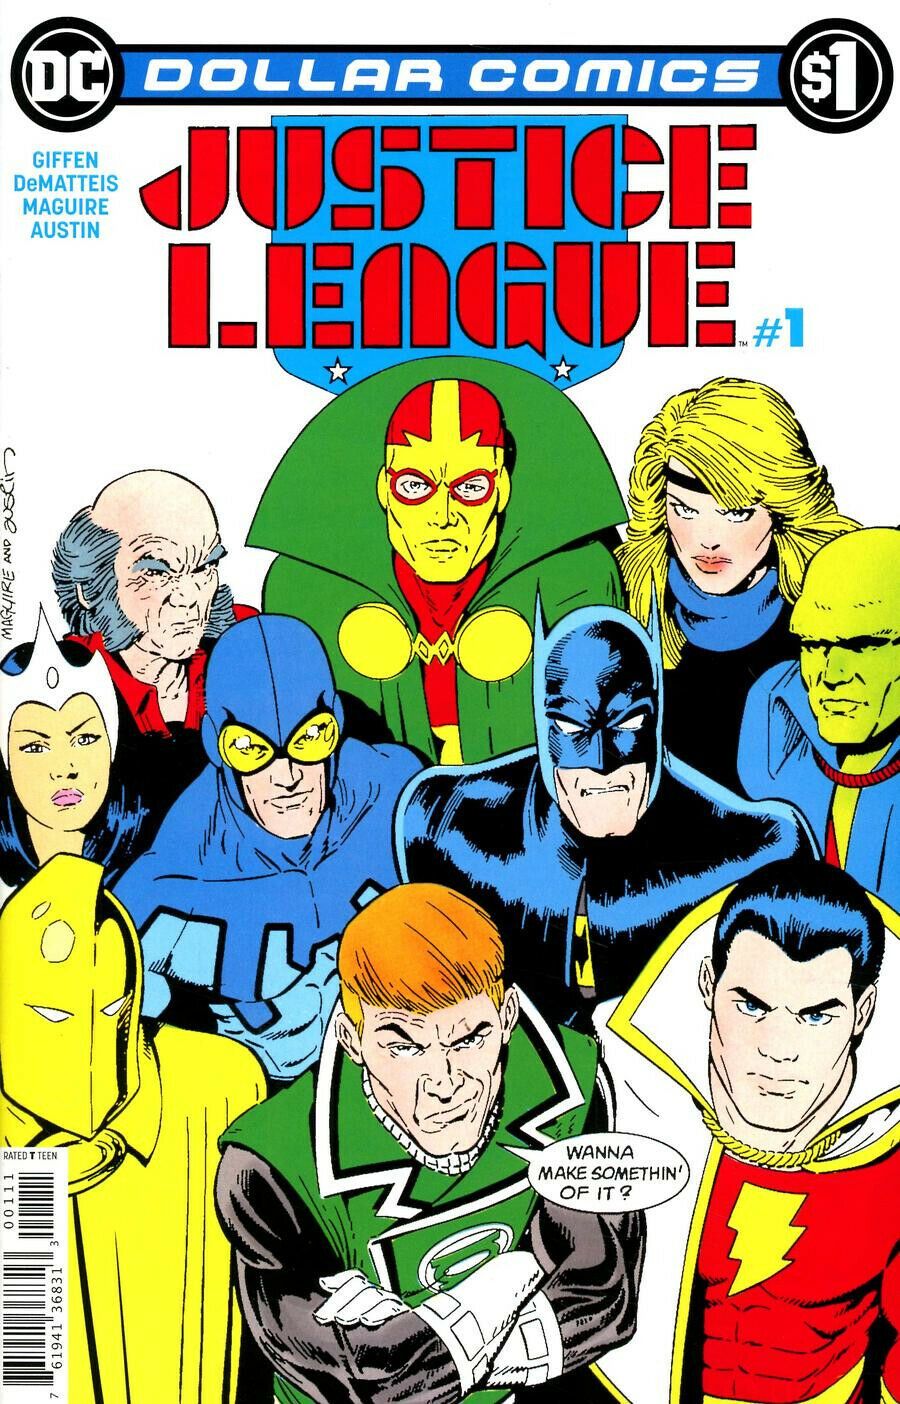 Dollar Comics: Justice League #1 Comic